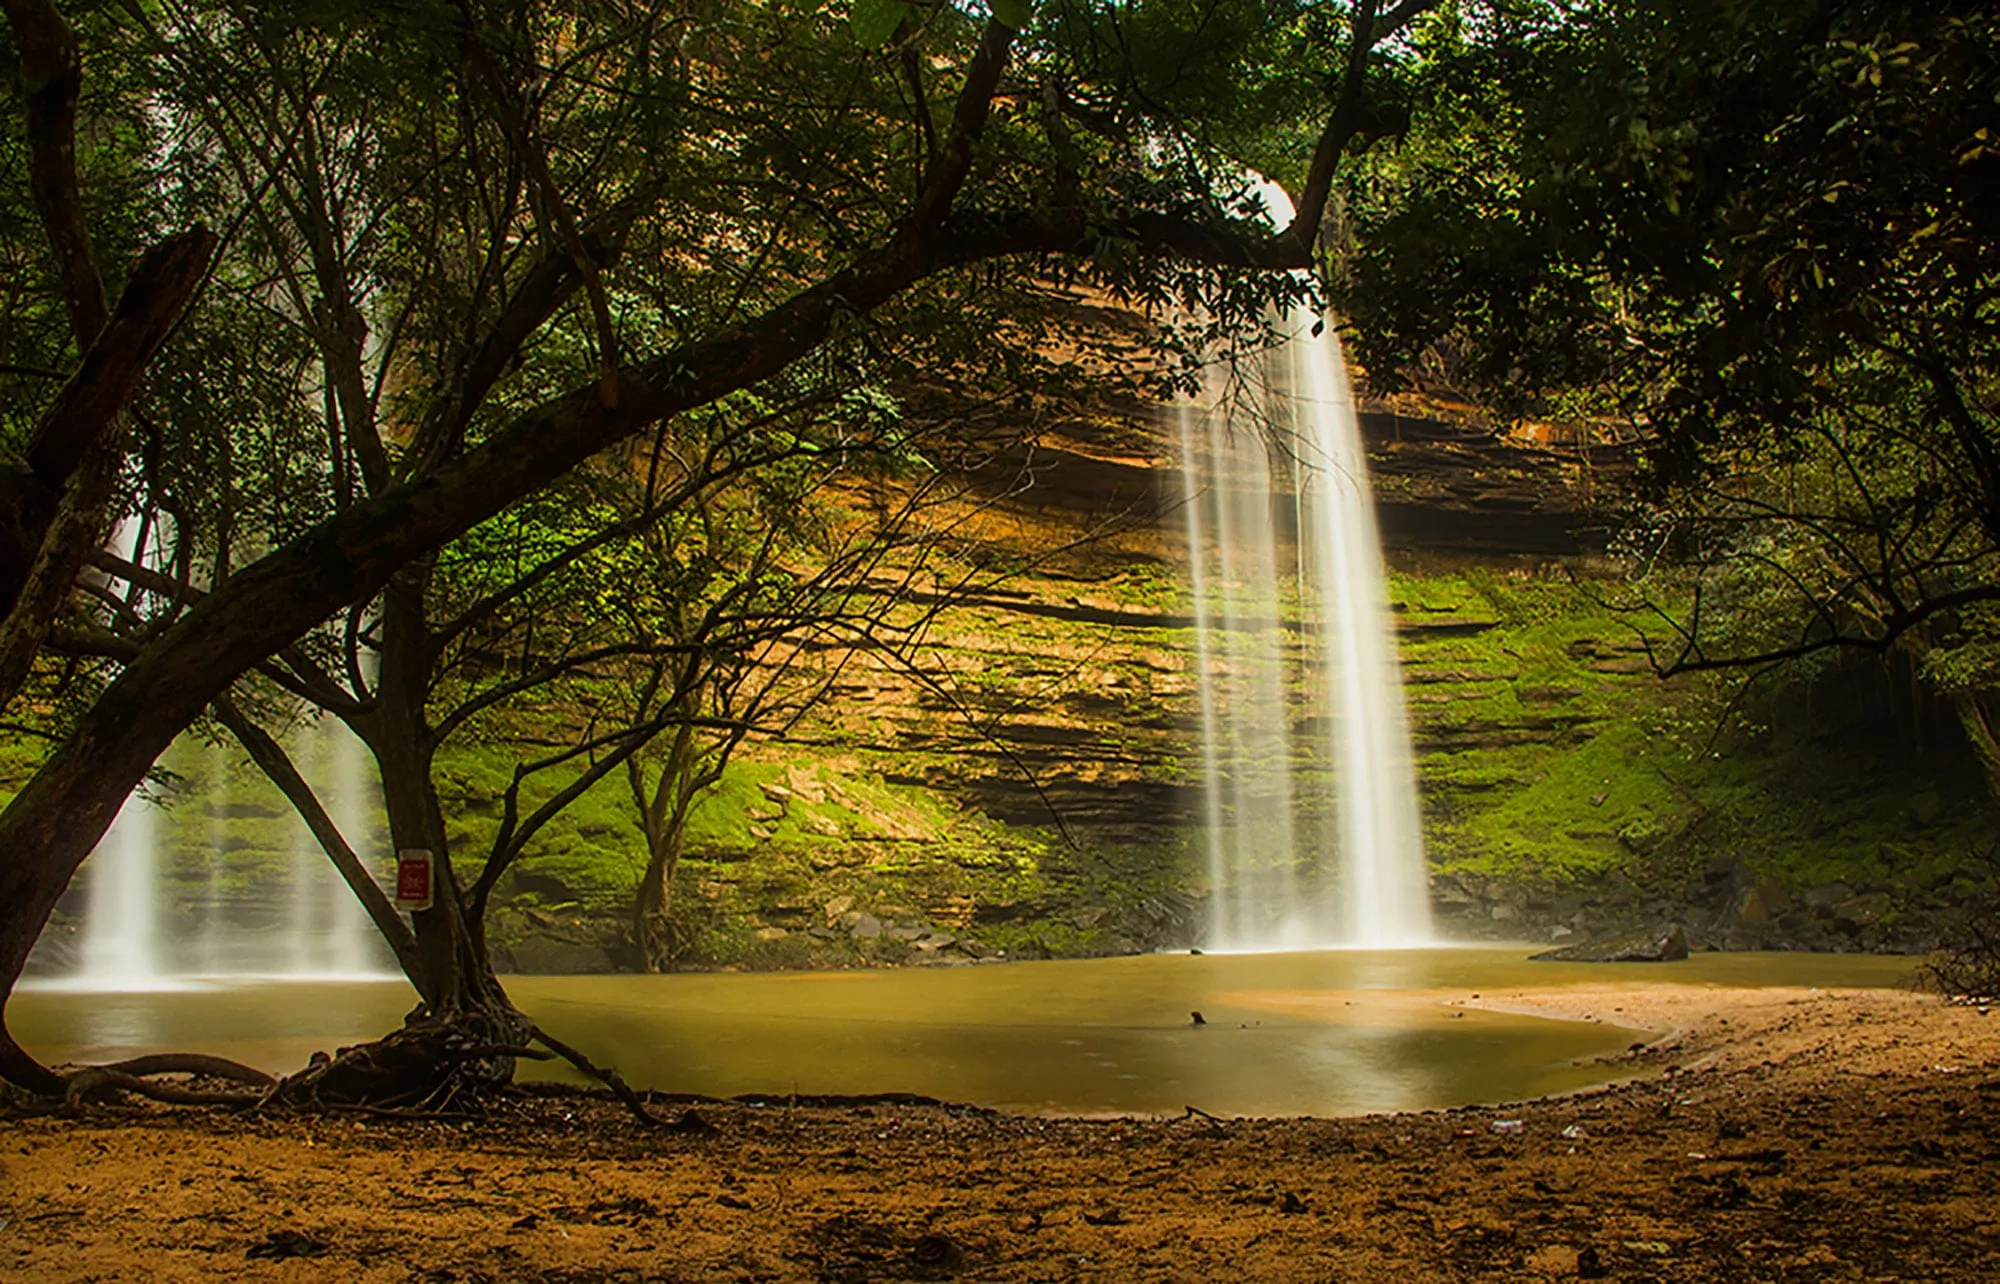 Boti Waterfalls in Ghana, Africa | Waterfalls - Rated 3.4